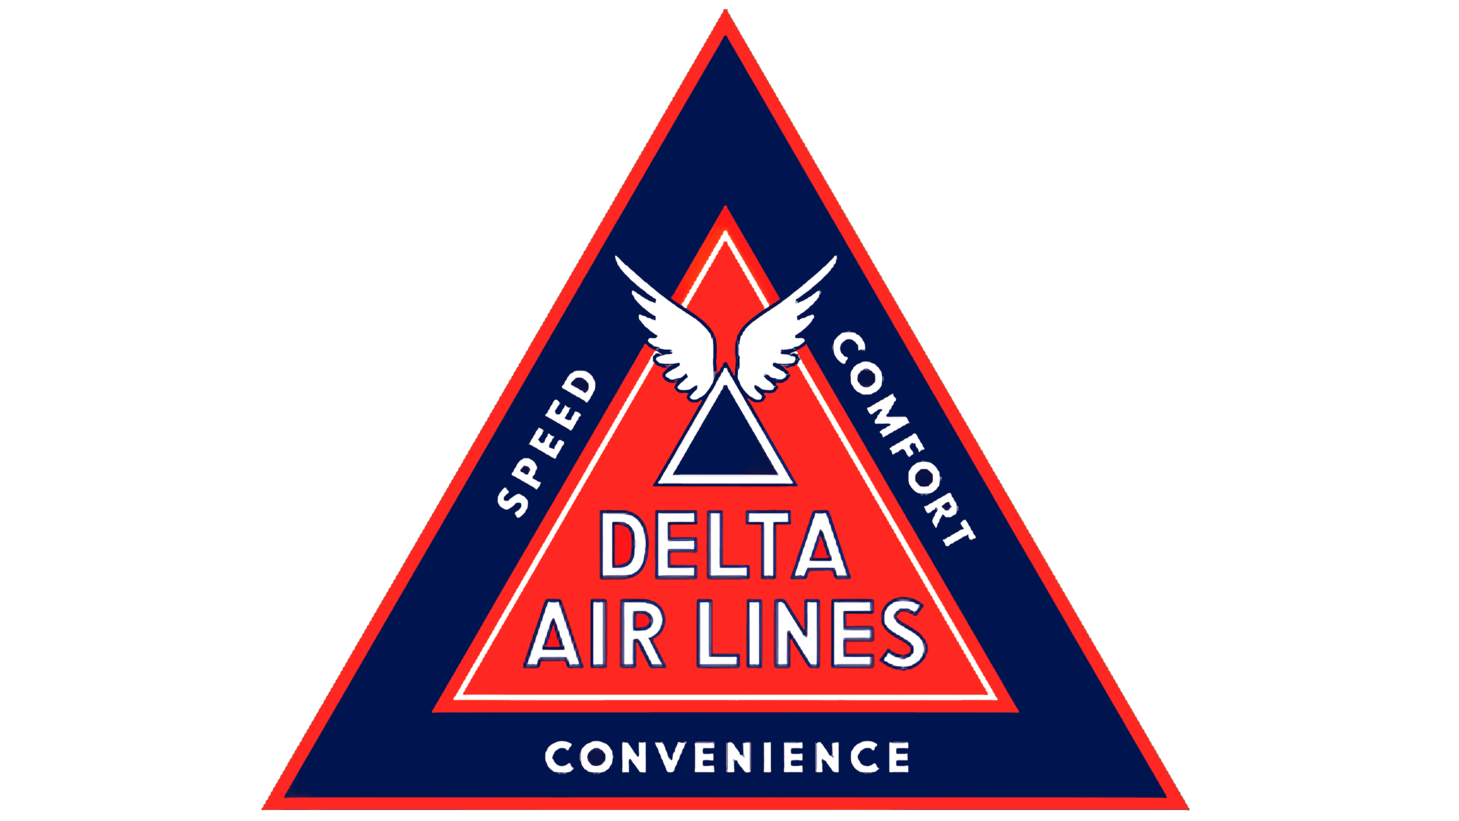 Delta air lines first era sign 1935